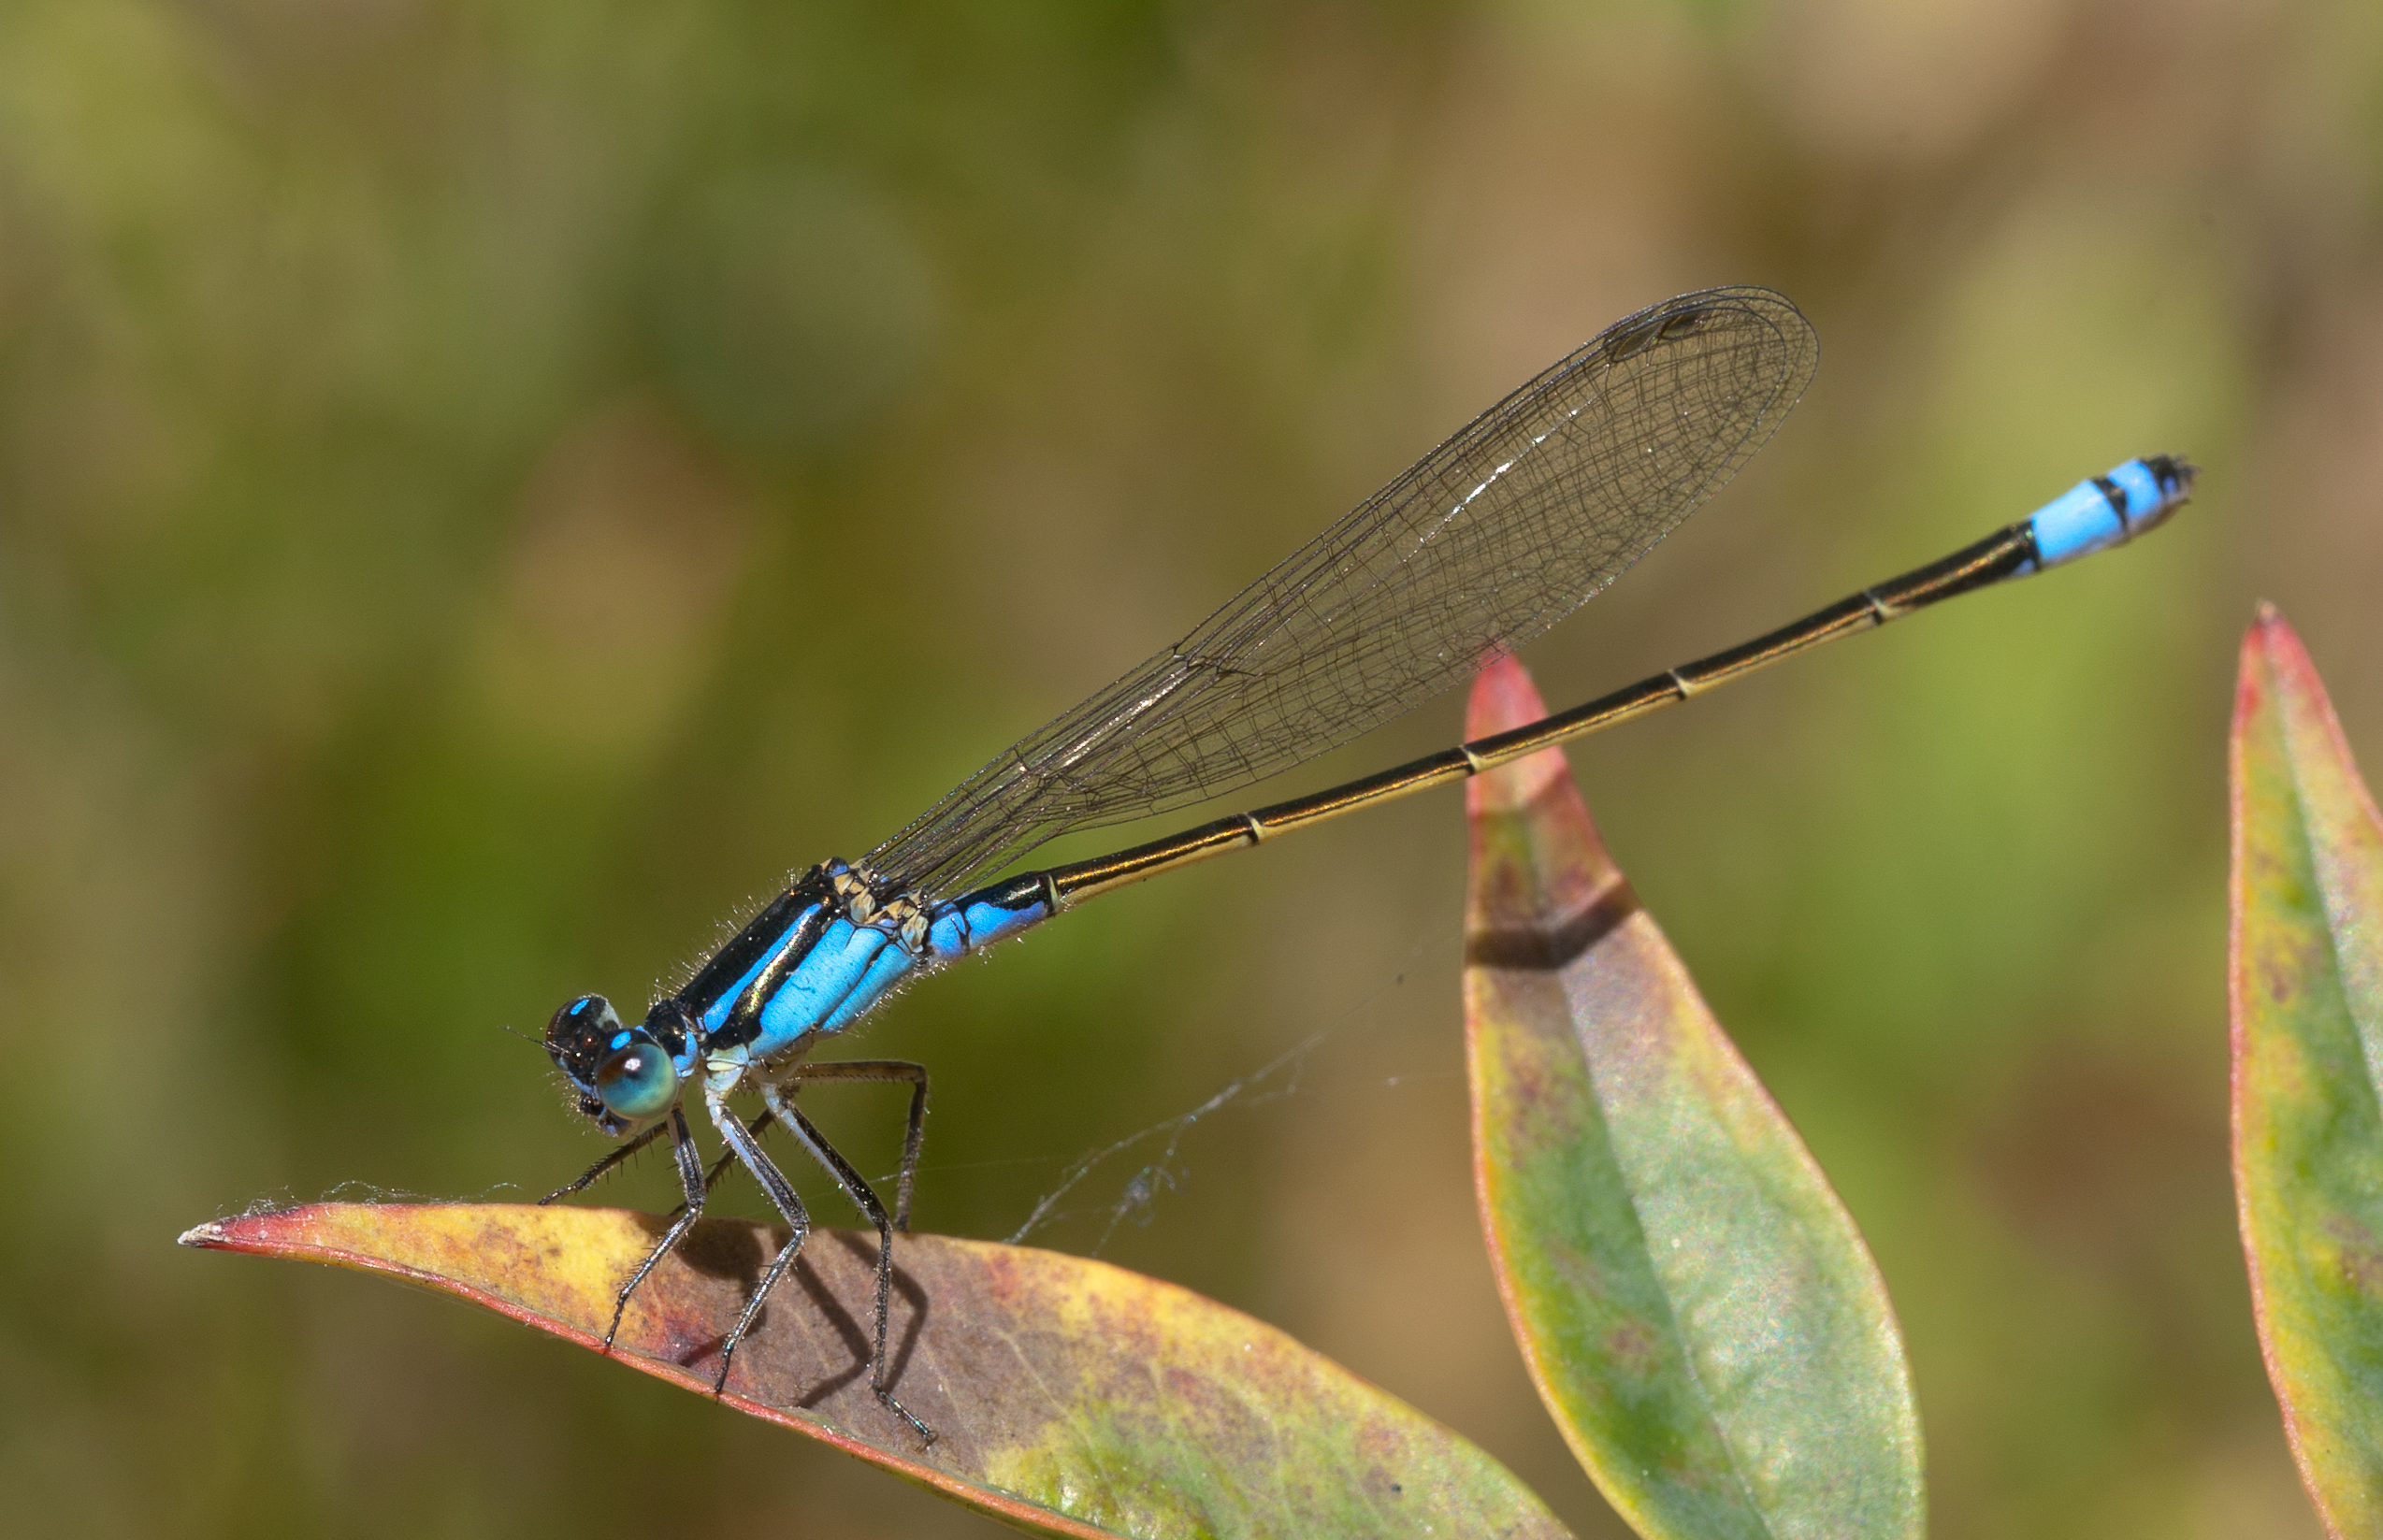 Sydney dragonfly Victoria Park pond 8